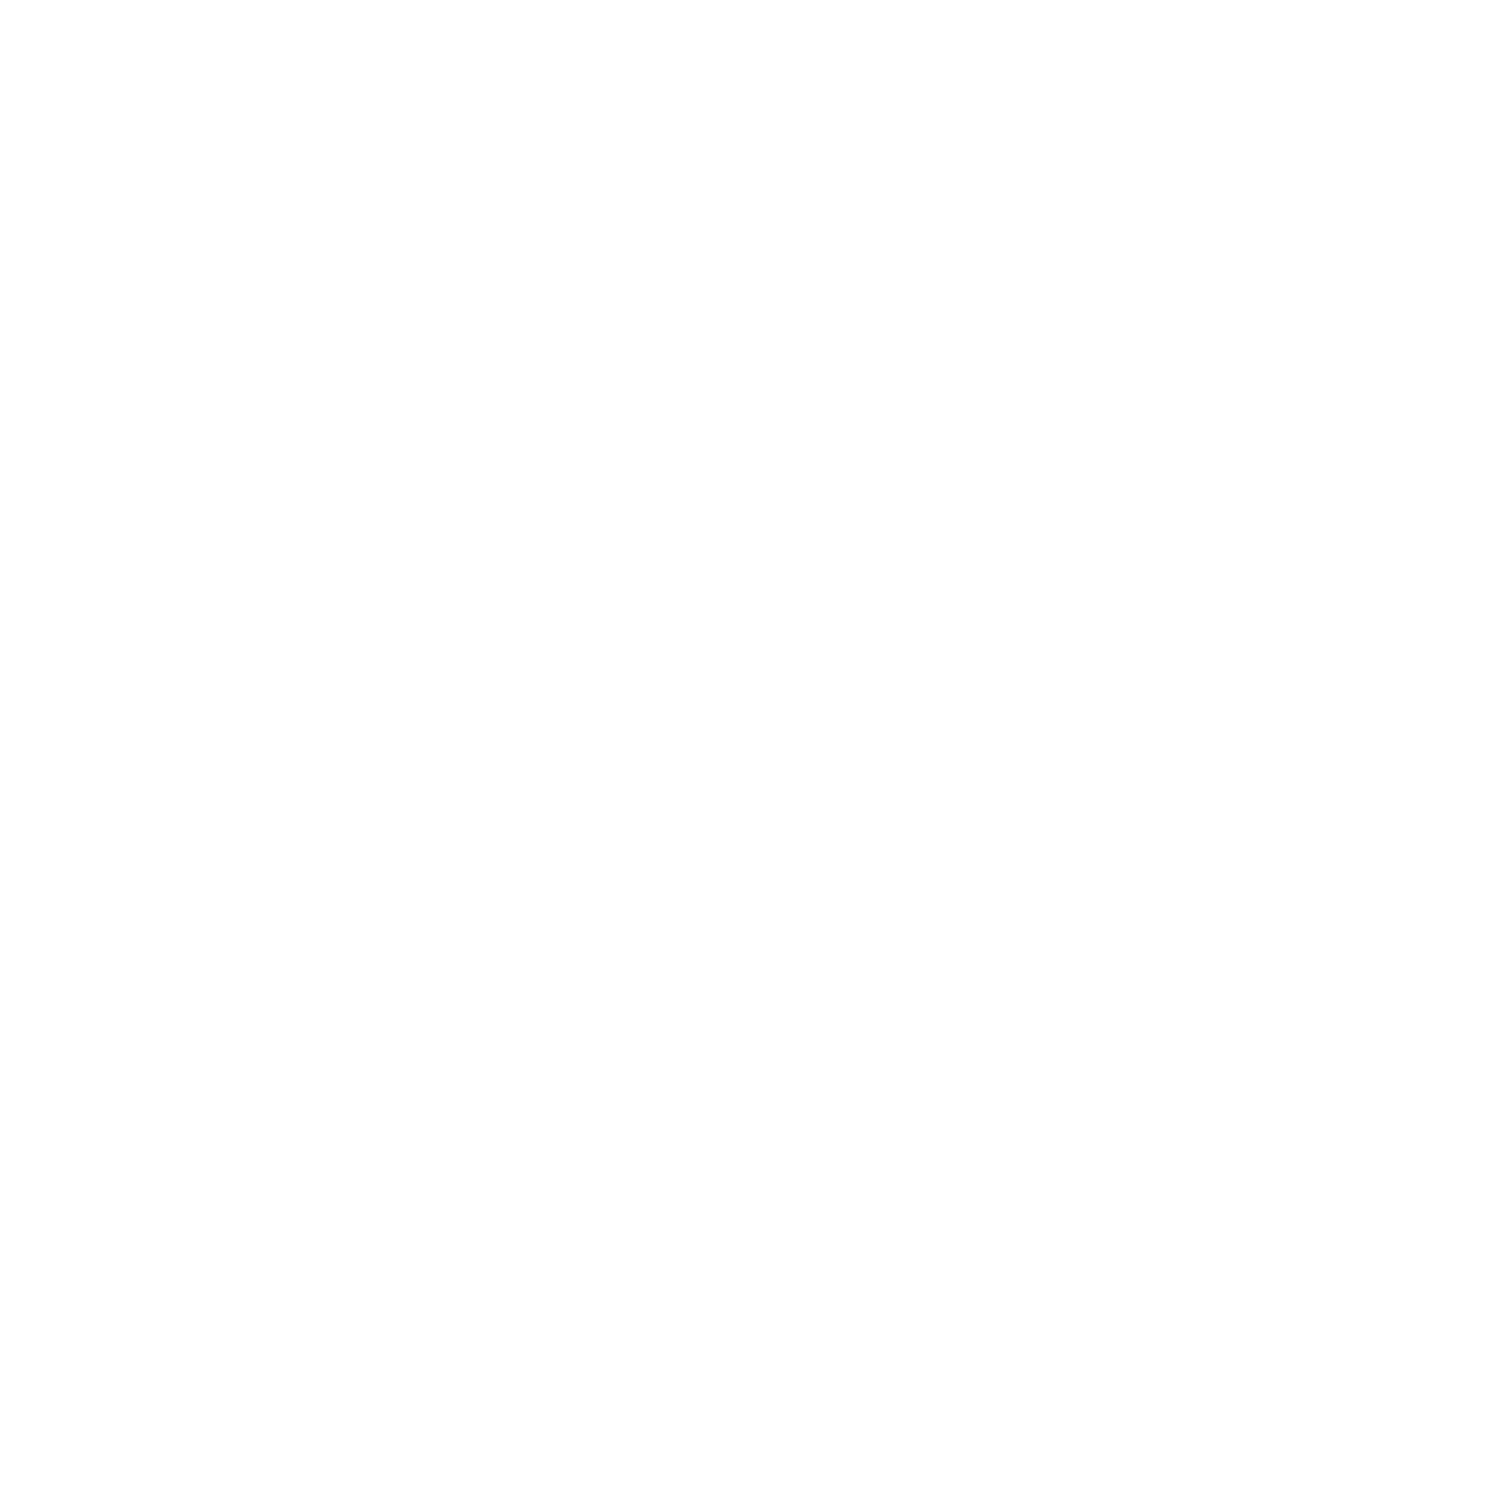 ALVAREZ DESIGNS